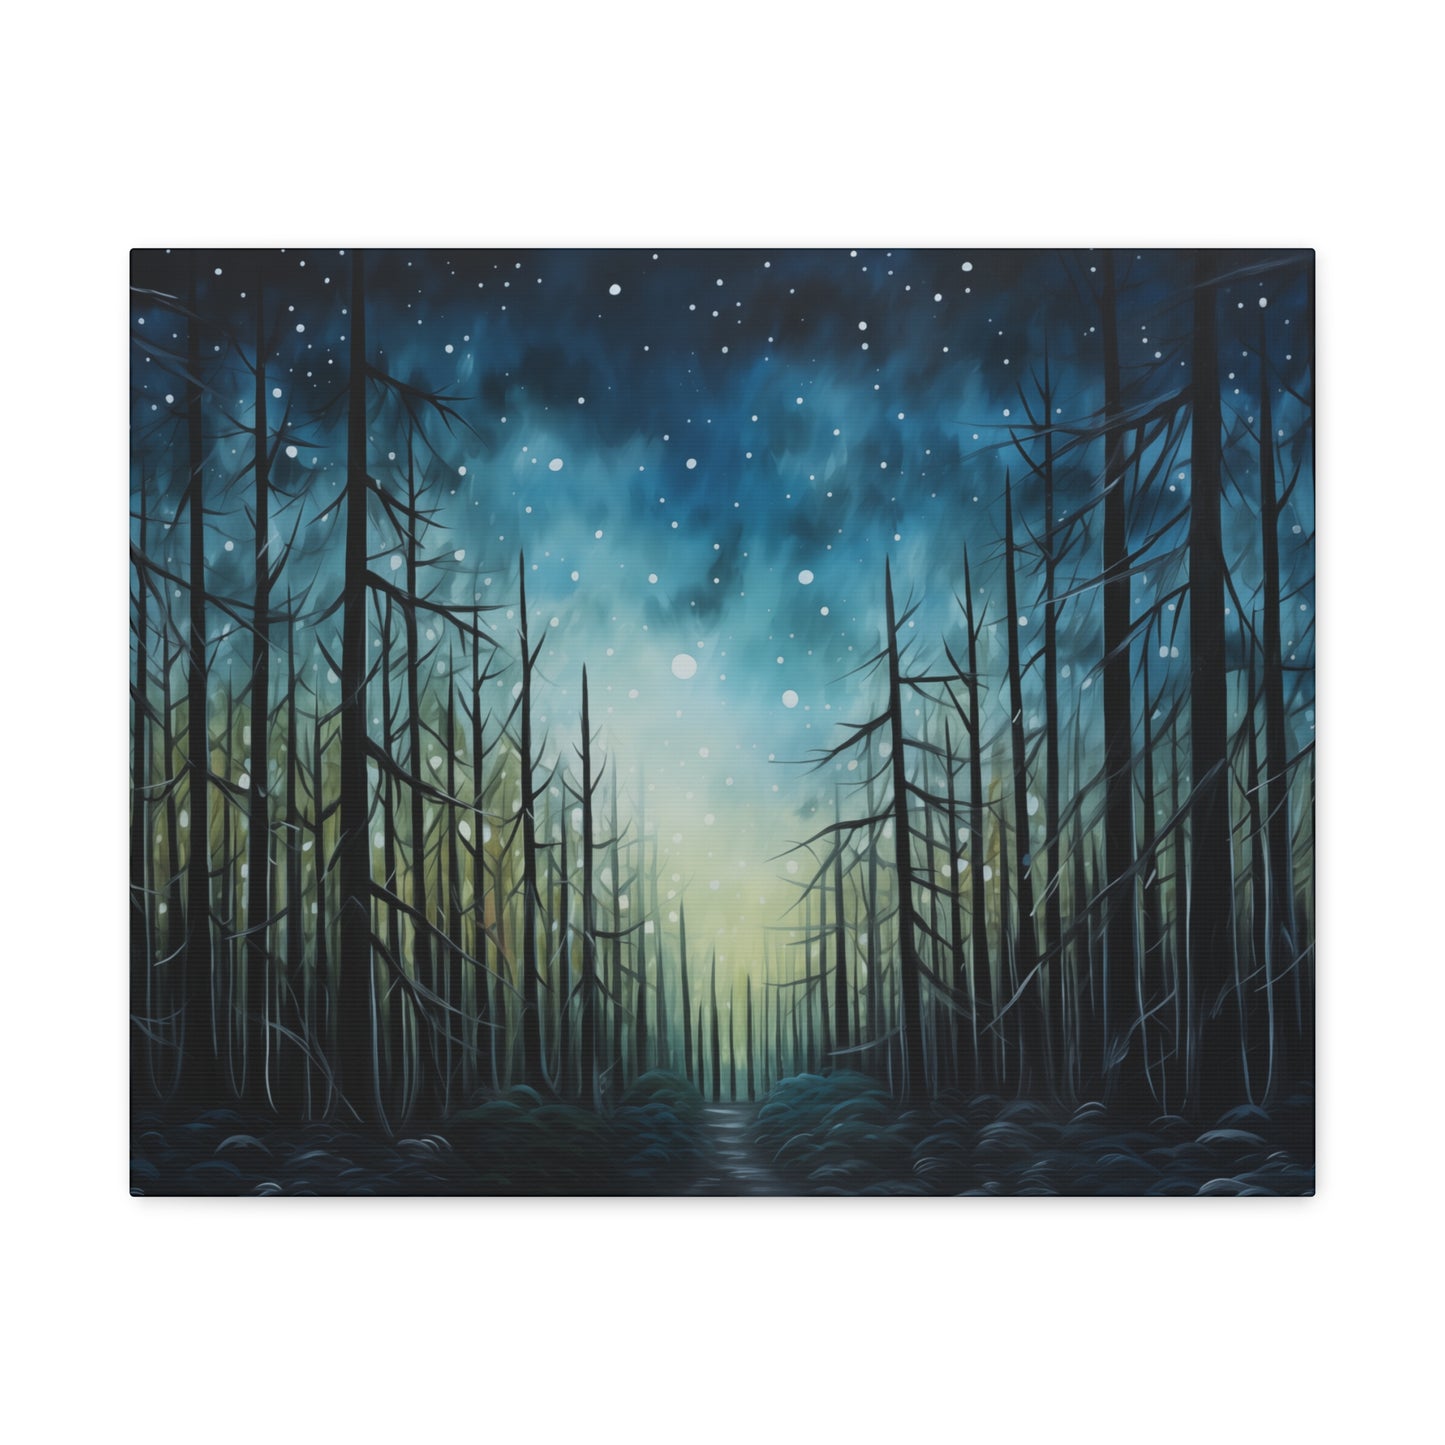 A dark forest under a twilight sky